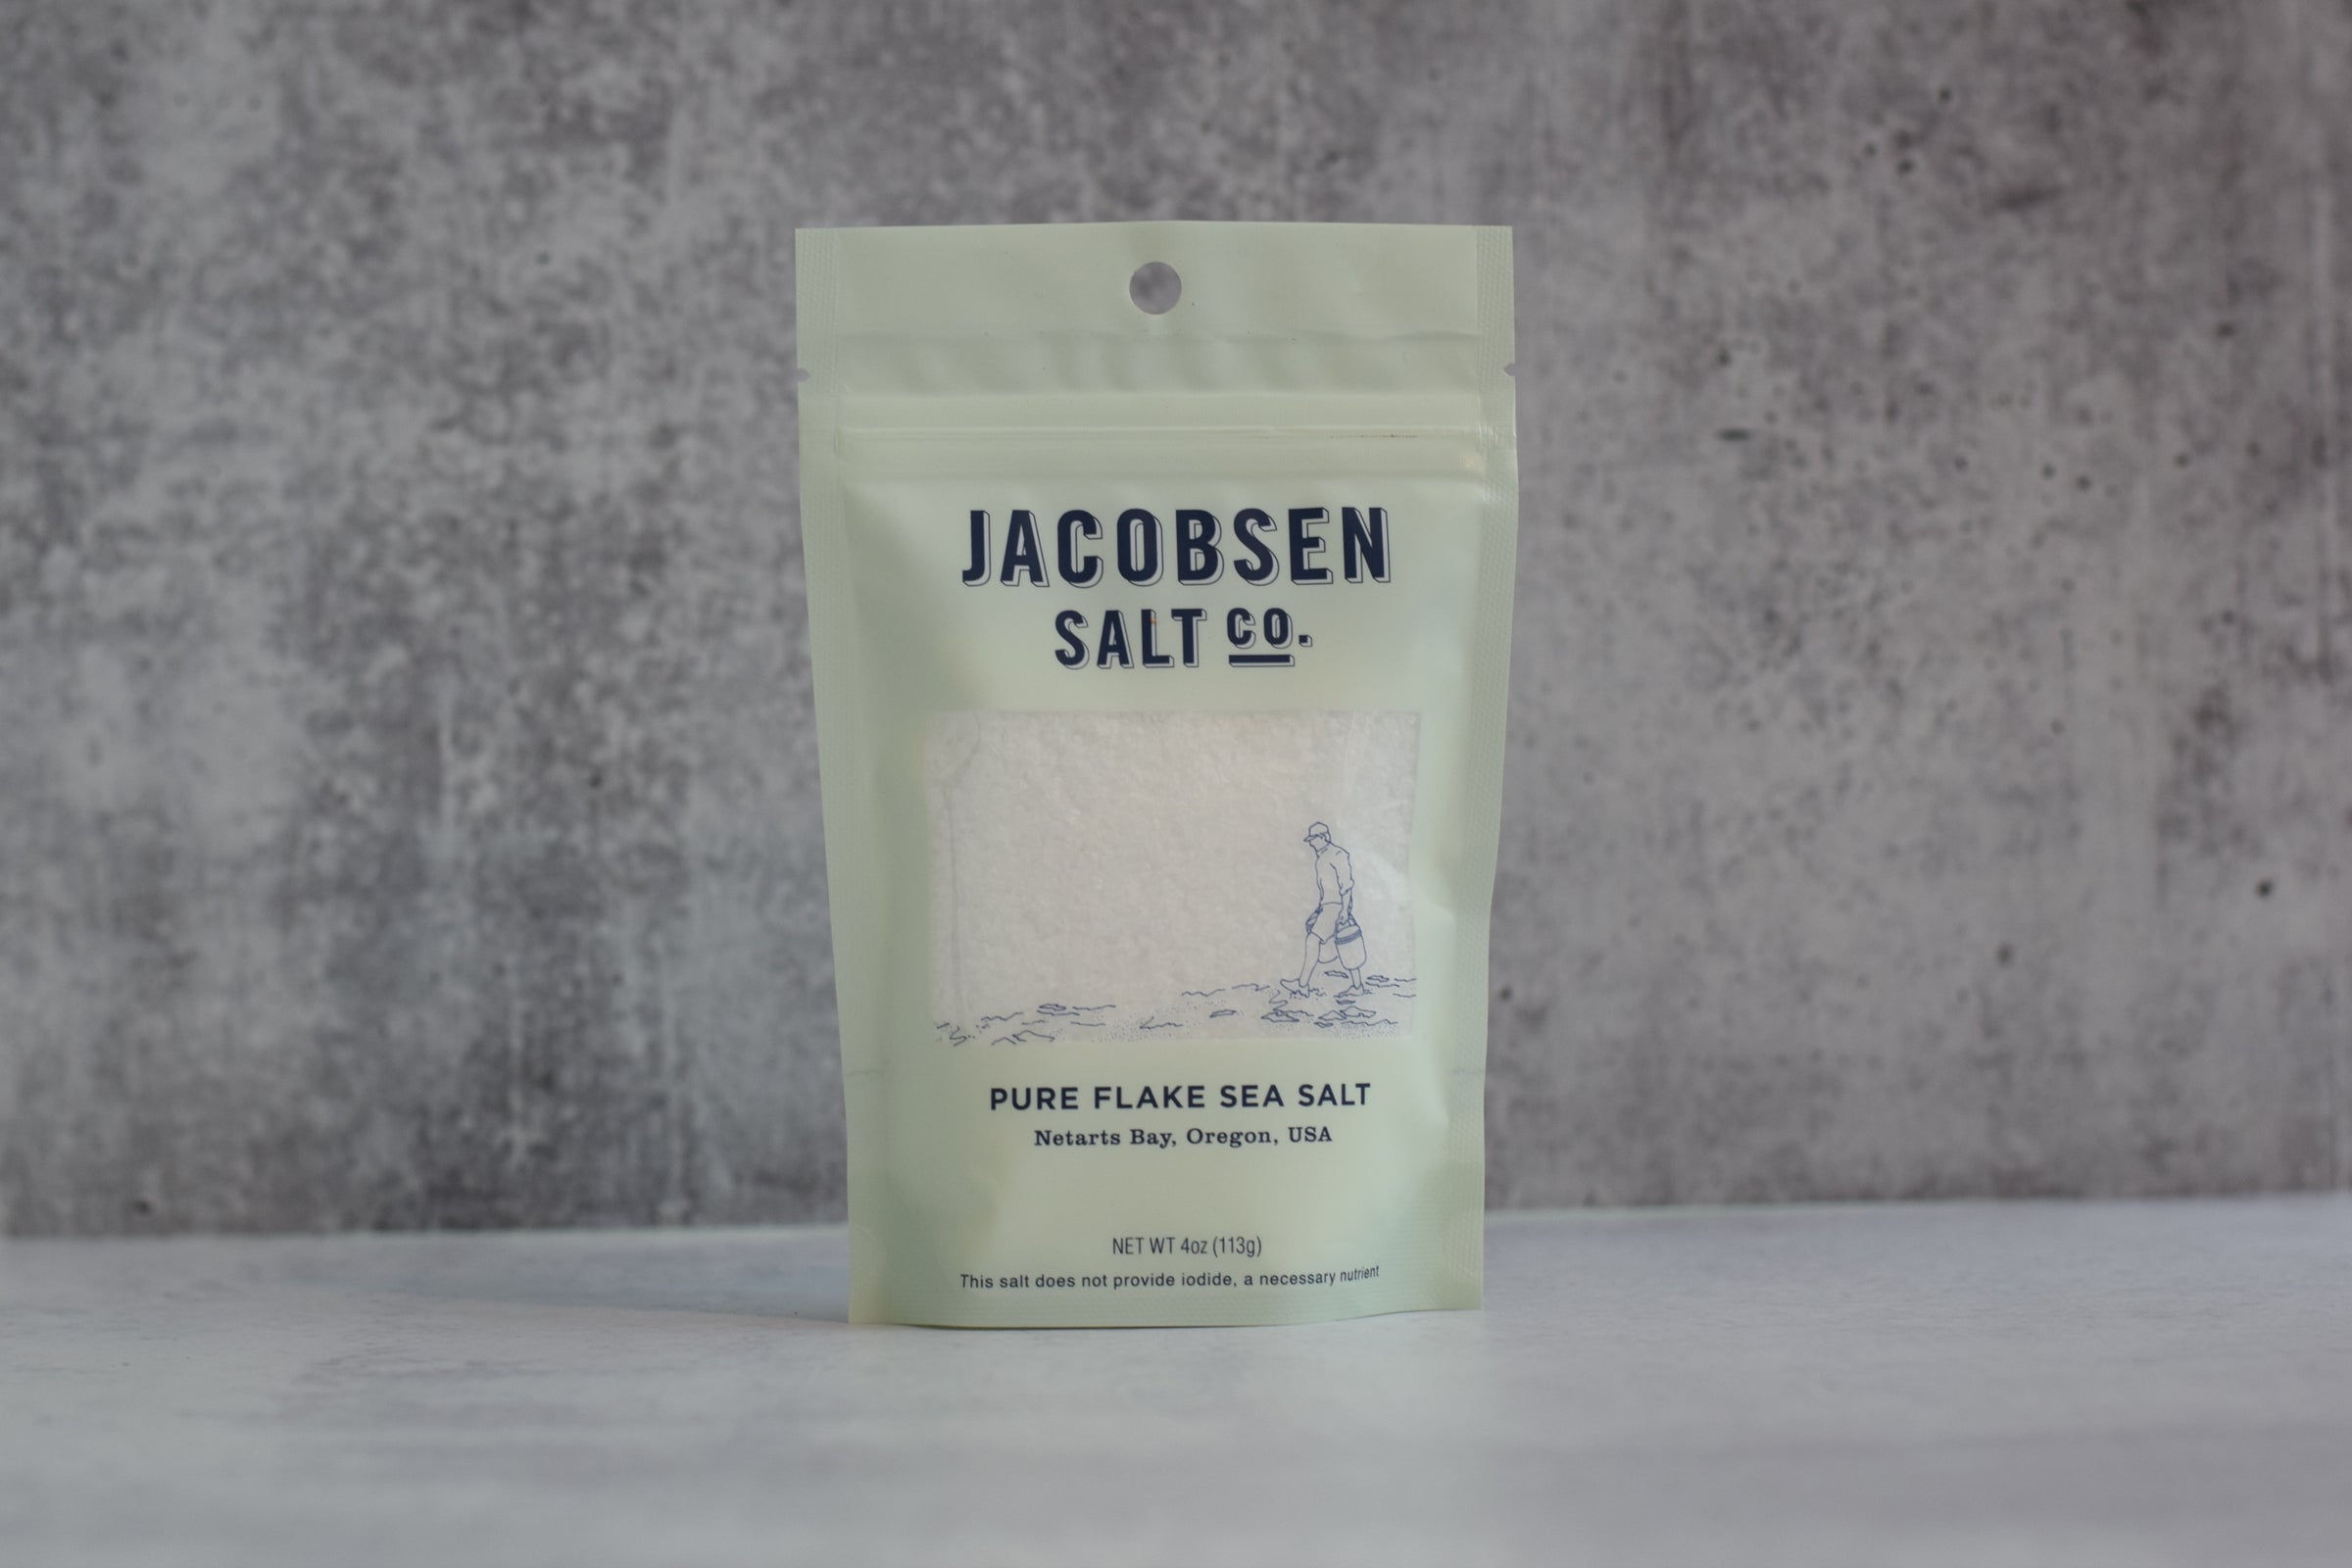 Pure Flake Sea Salt Bag, Jacobsen Salt Co.